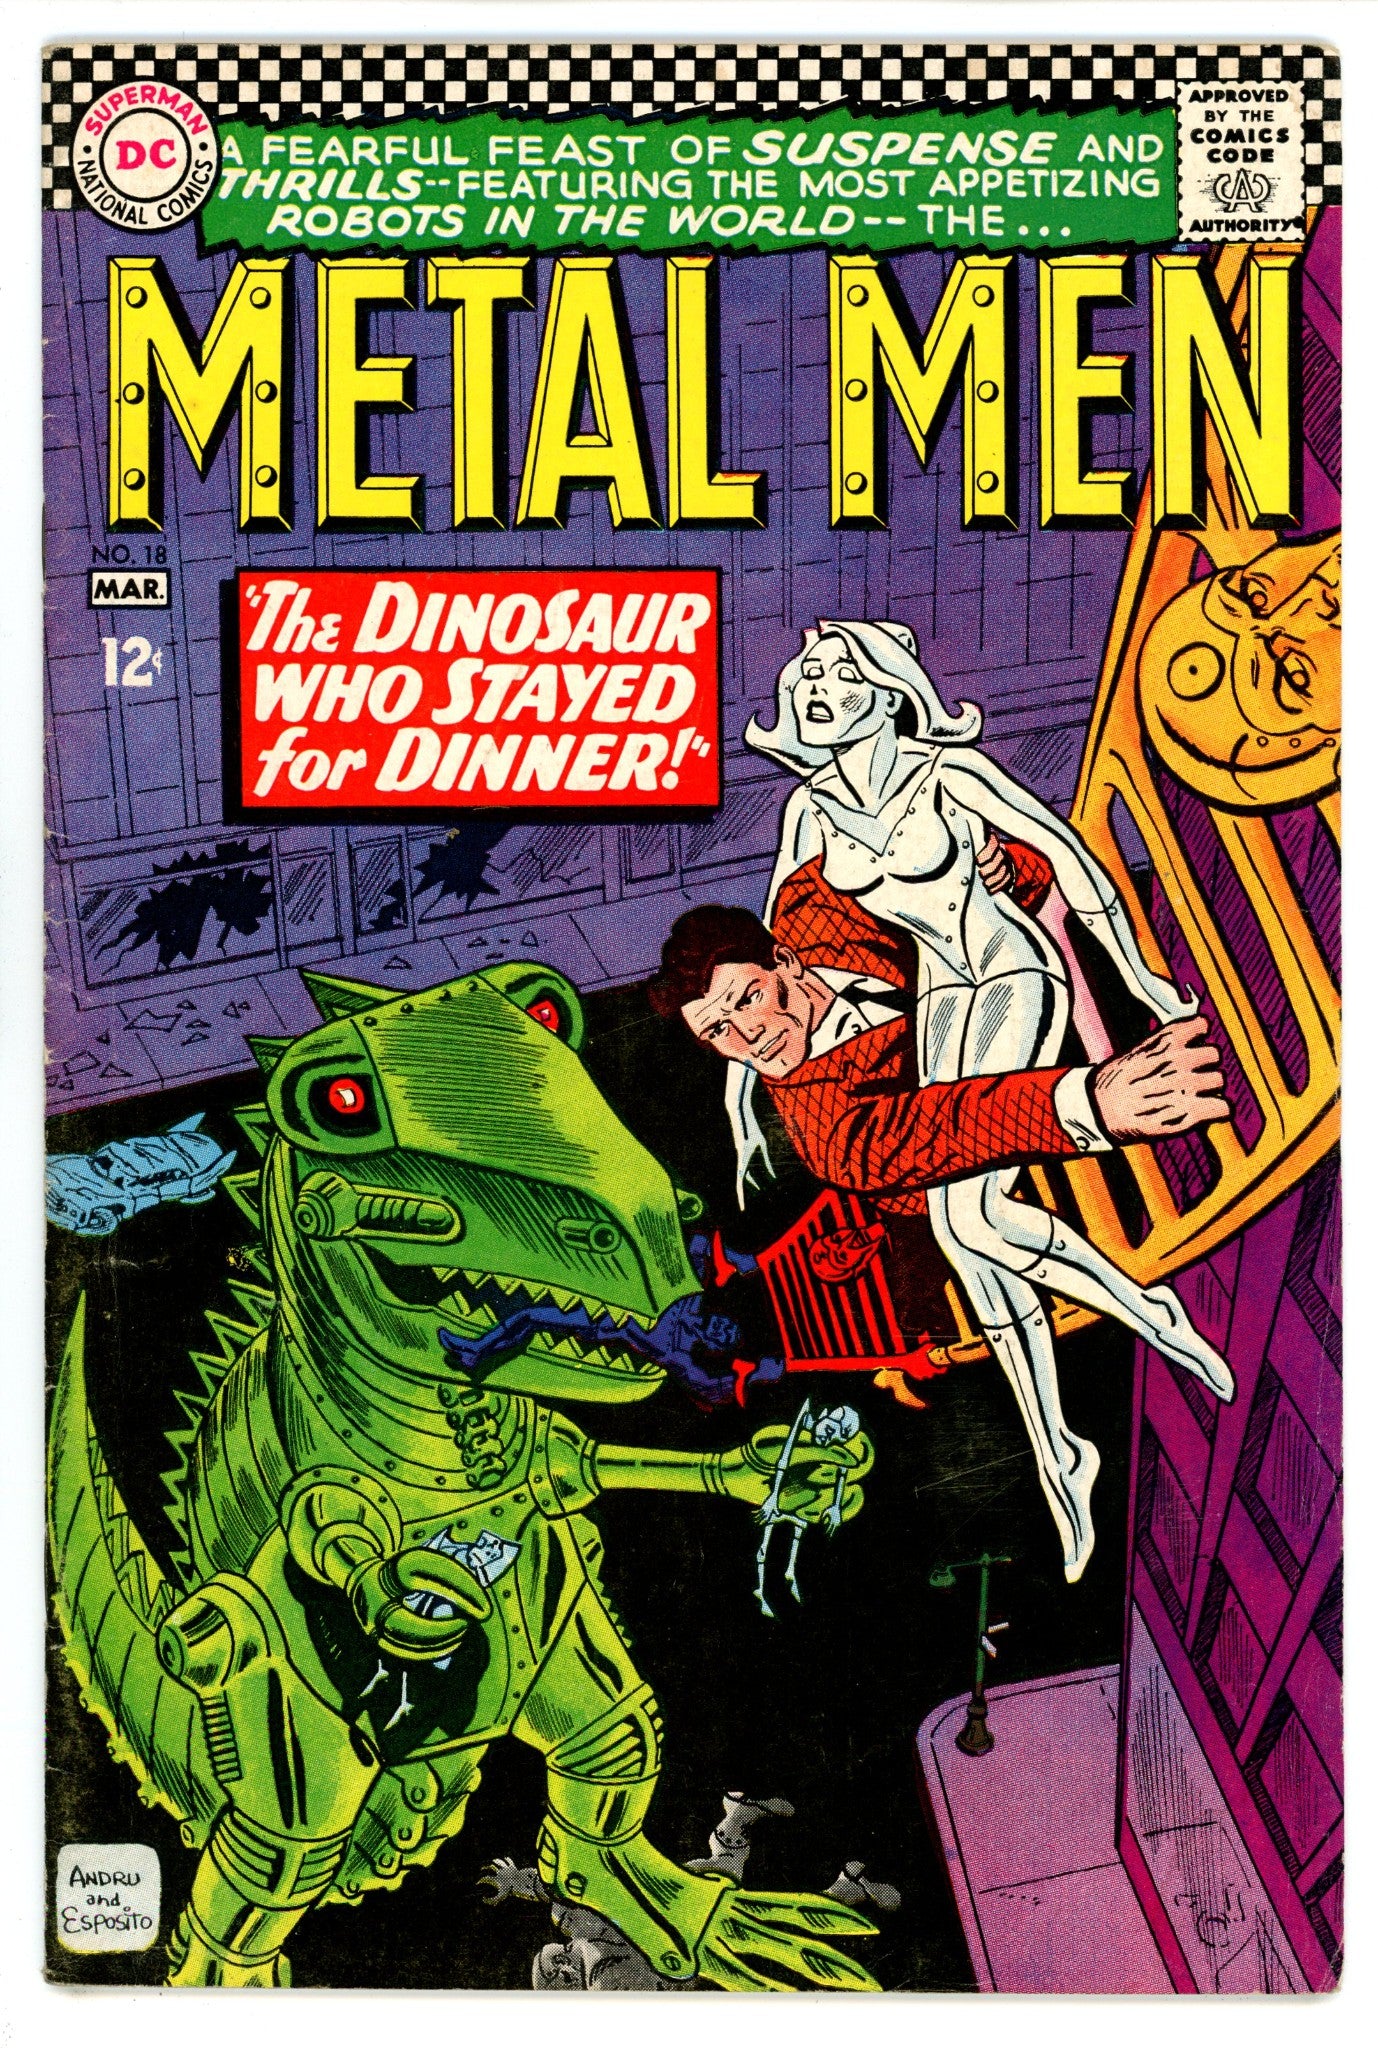 Metal Men Vol 1 18 VG+ (4.5) (1966) 